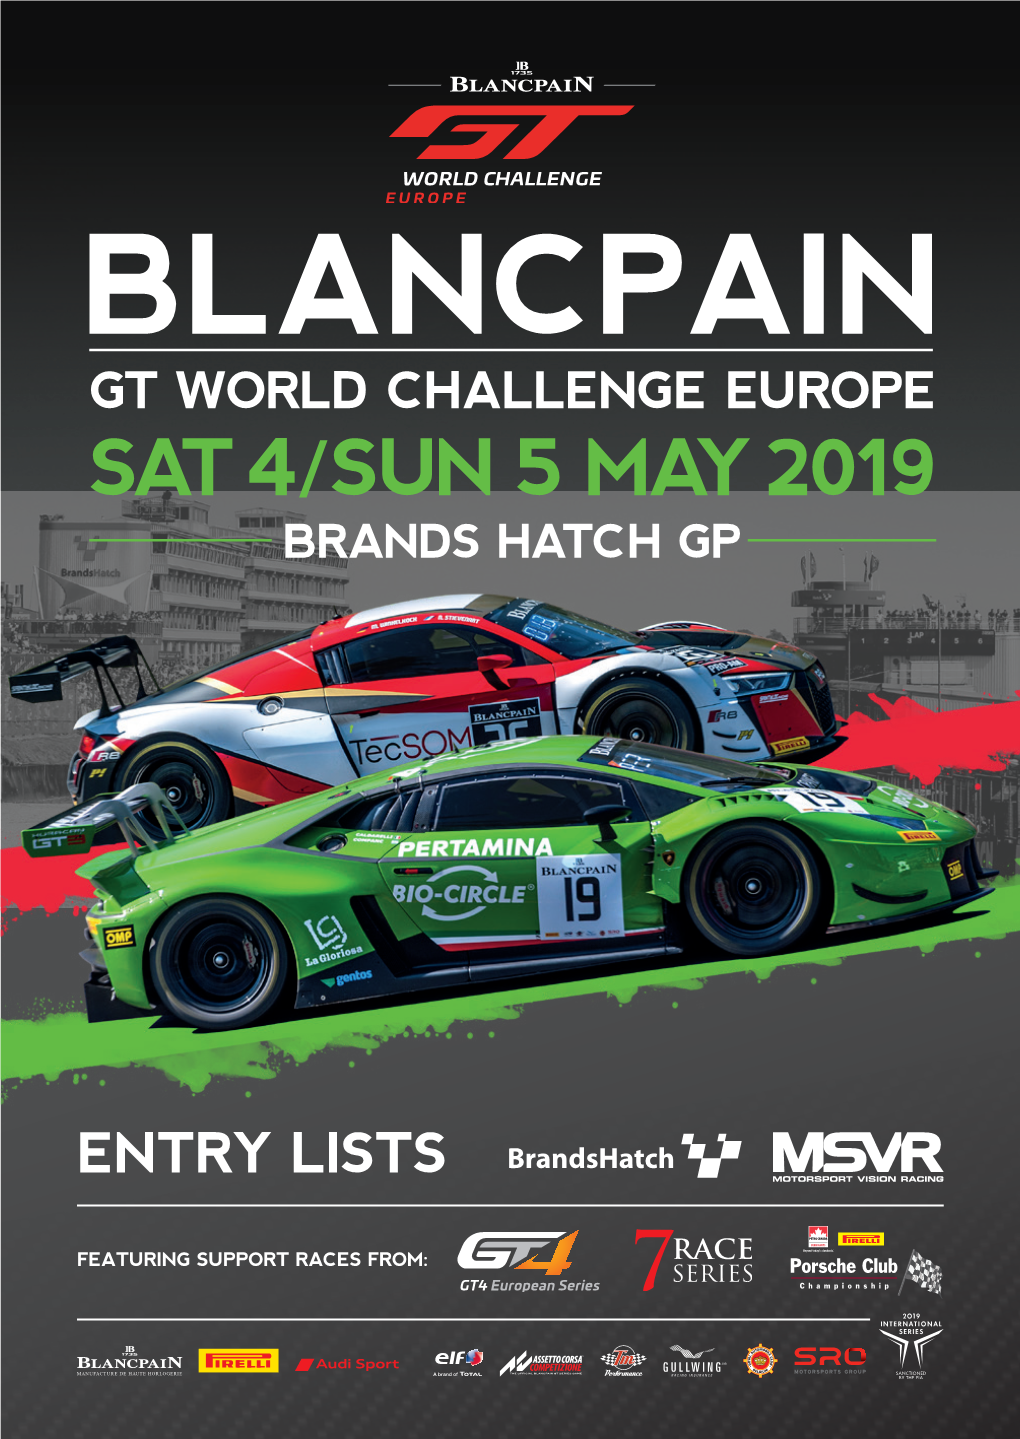 Blancpain Gt World Challenge Europe Sat4/Sun 5 May 2019 Brands Hatch Gp